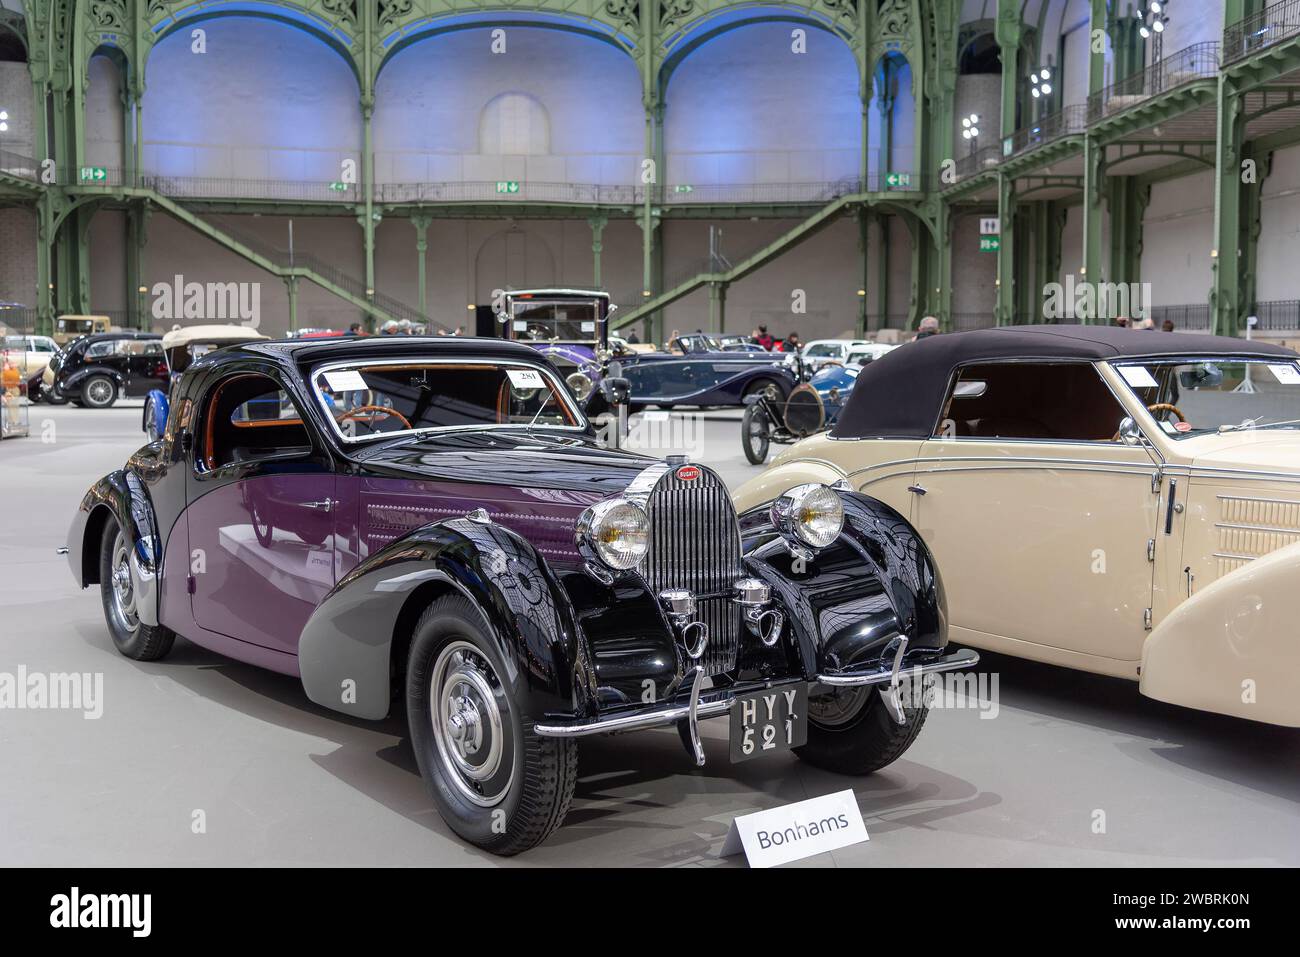 Paris, France - Bonhams 2020 sale at the Grand Palais in Paris. Focus on a black and purple 1938 Bugatti Type 57 Atalante Coupé. Chassis no. 57633. Stock Photo